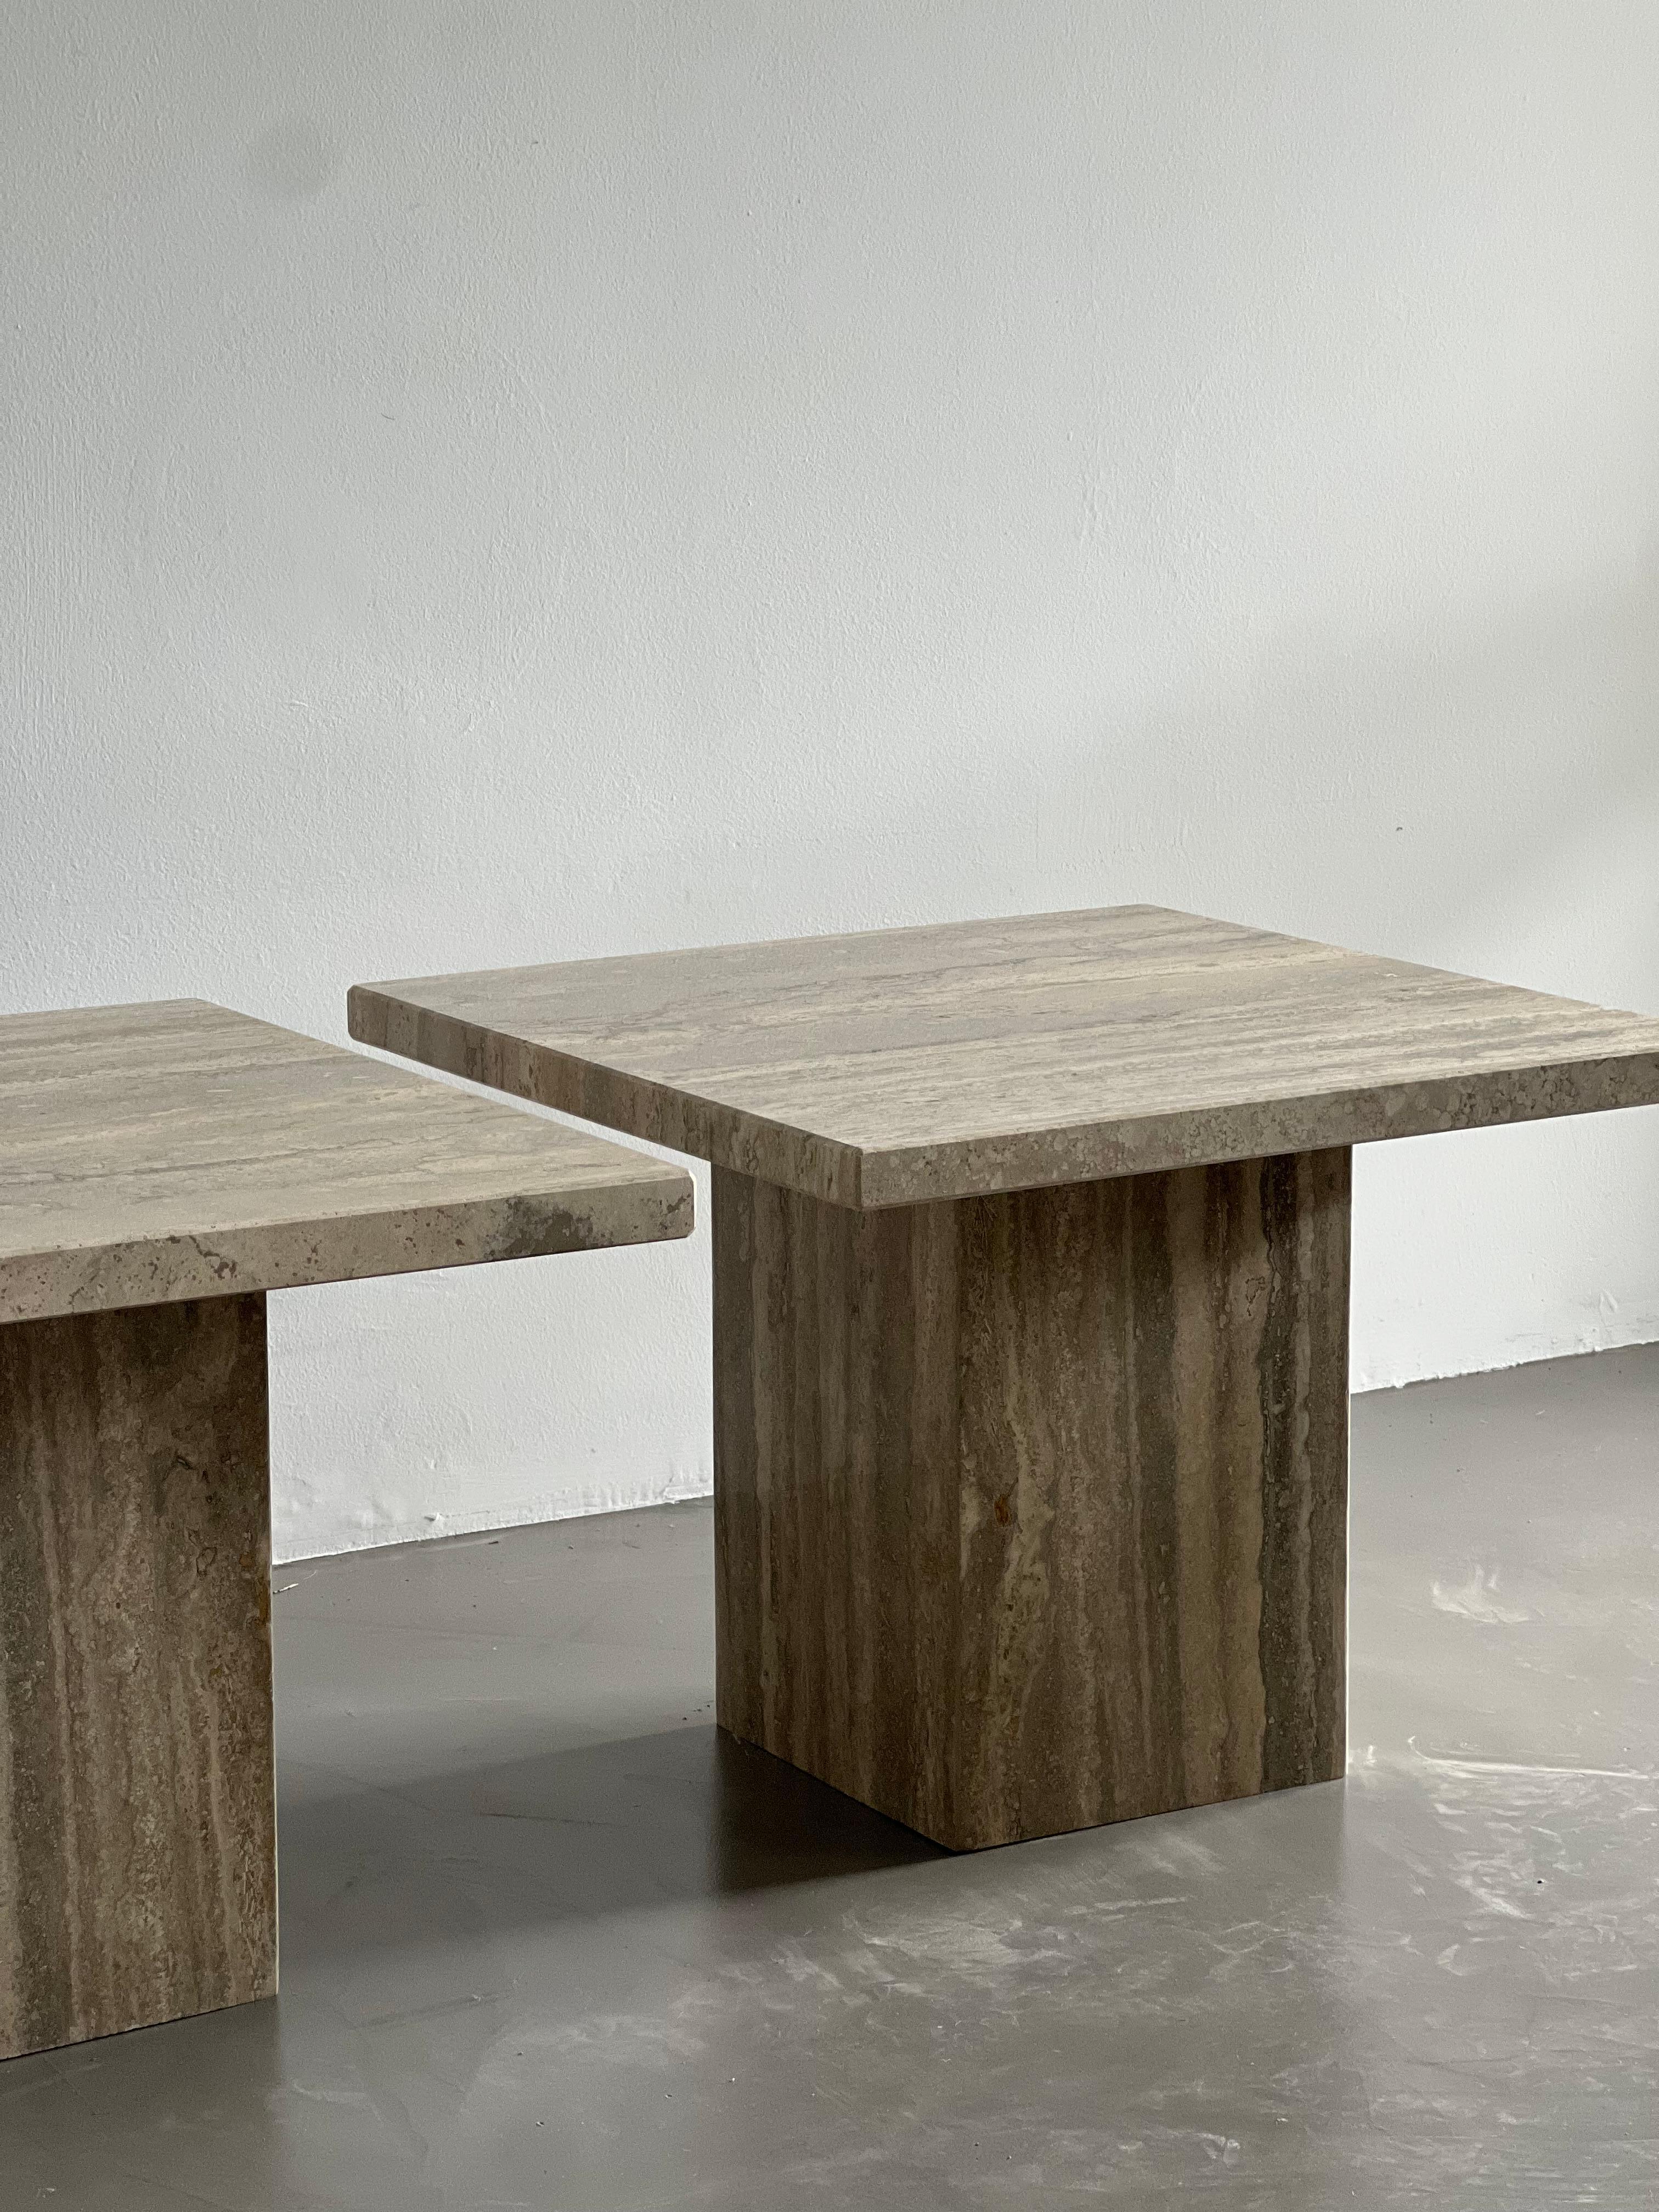 Mid-Century Modern Side Table in Travertine, Decorative Piece, Urban Wabi Style For Sale 5